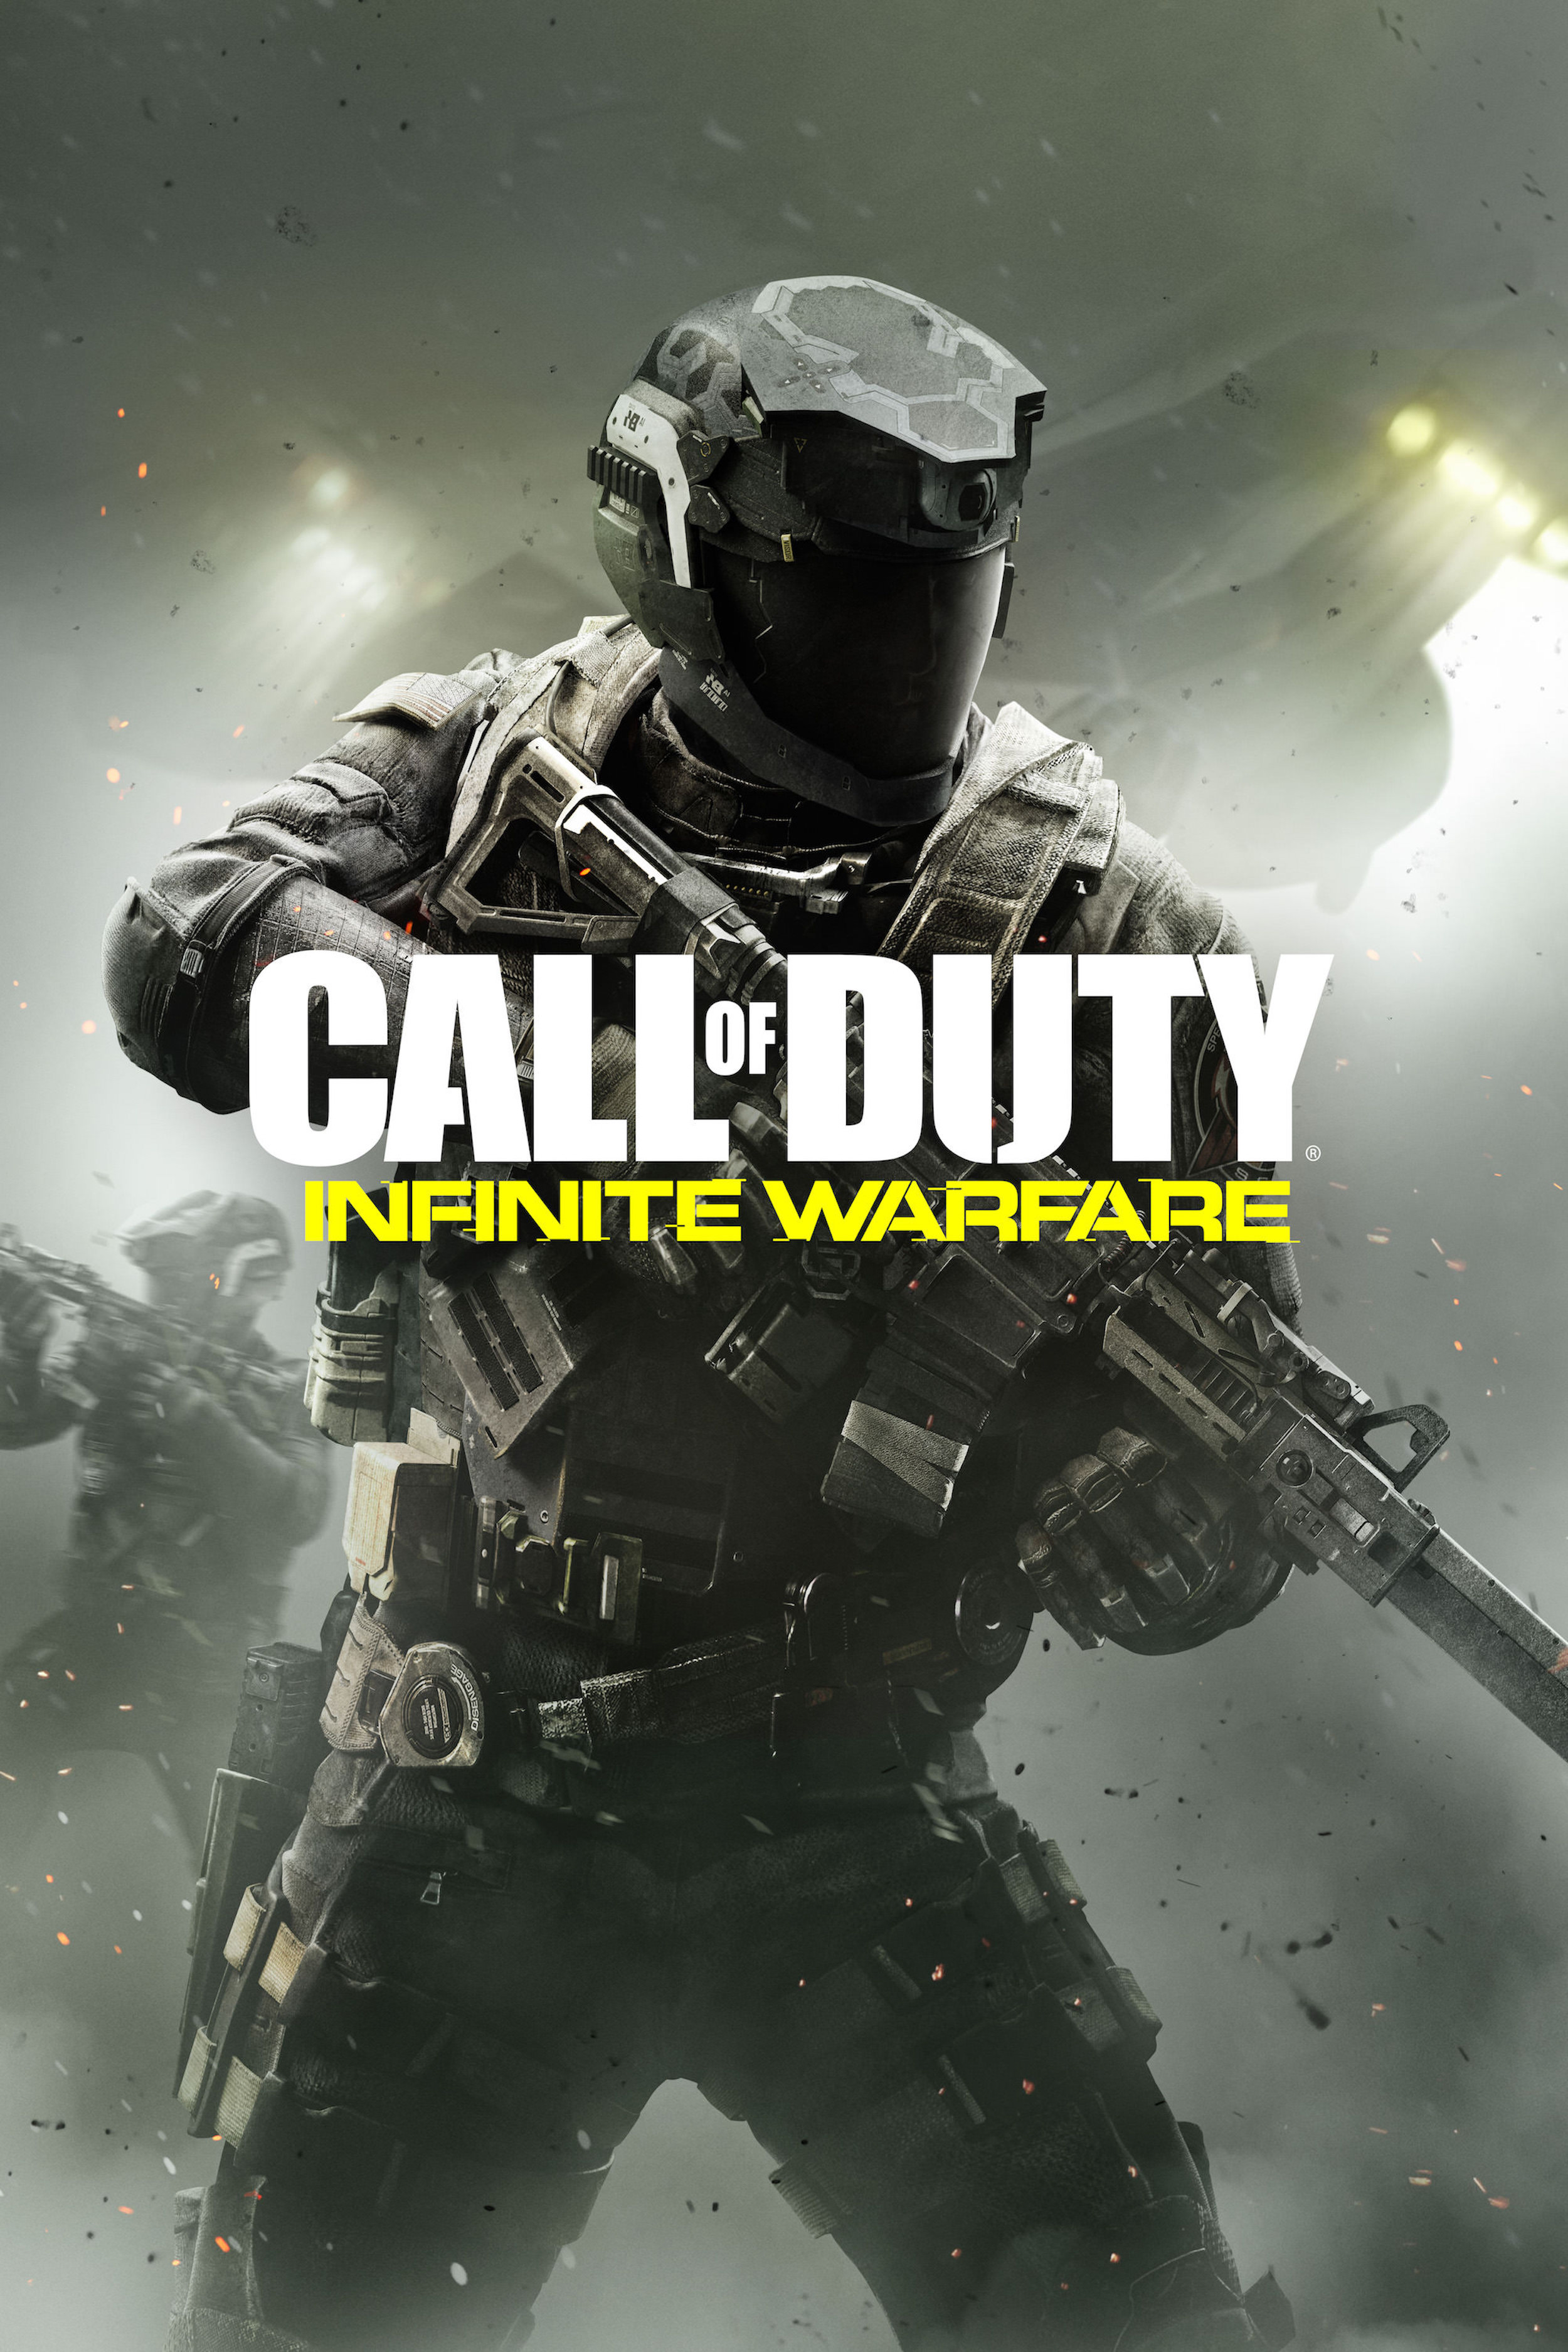 Warfare Area 2 download the new version for windows